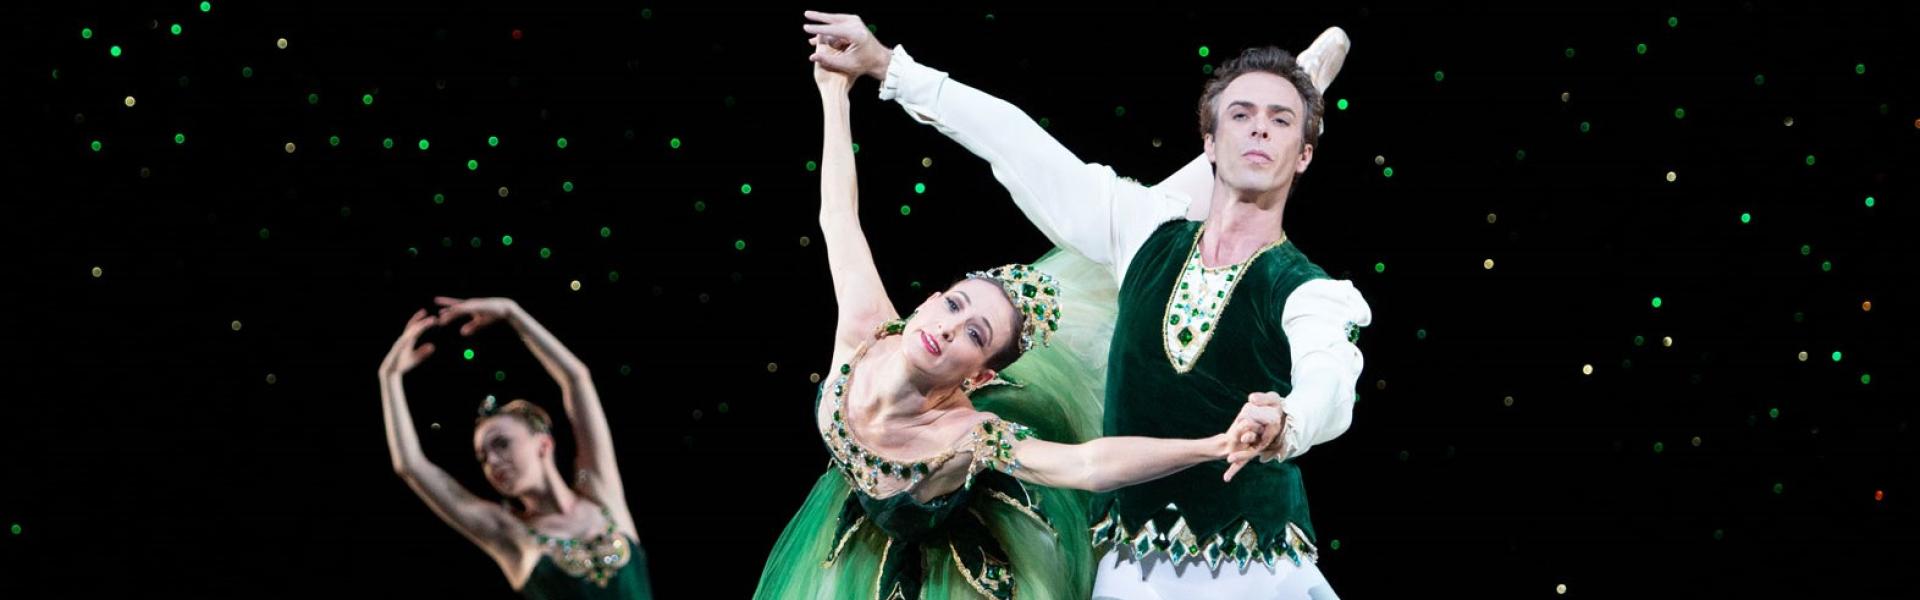 Miami City Ballet Shows Off Its Balanchine Bona Fides